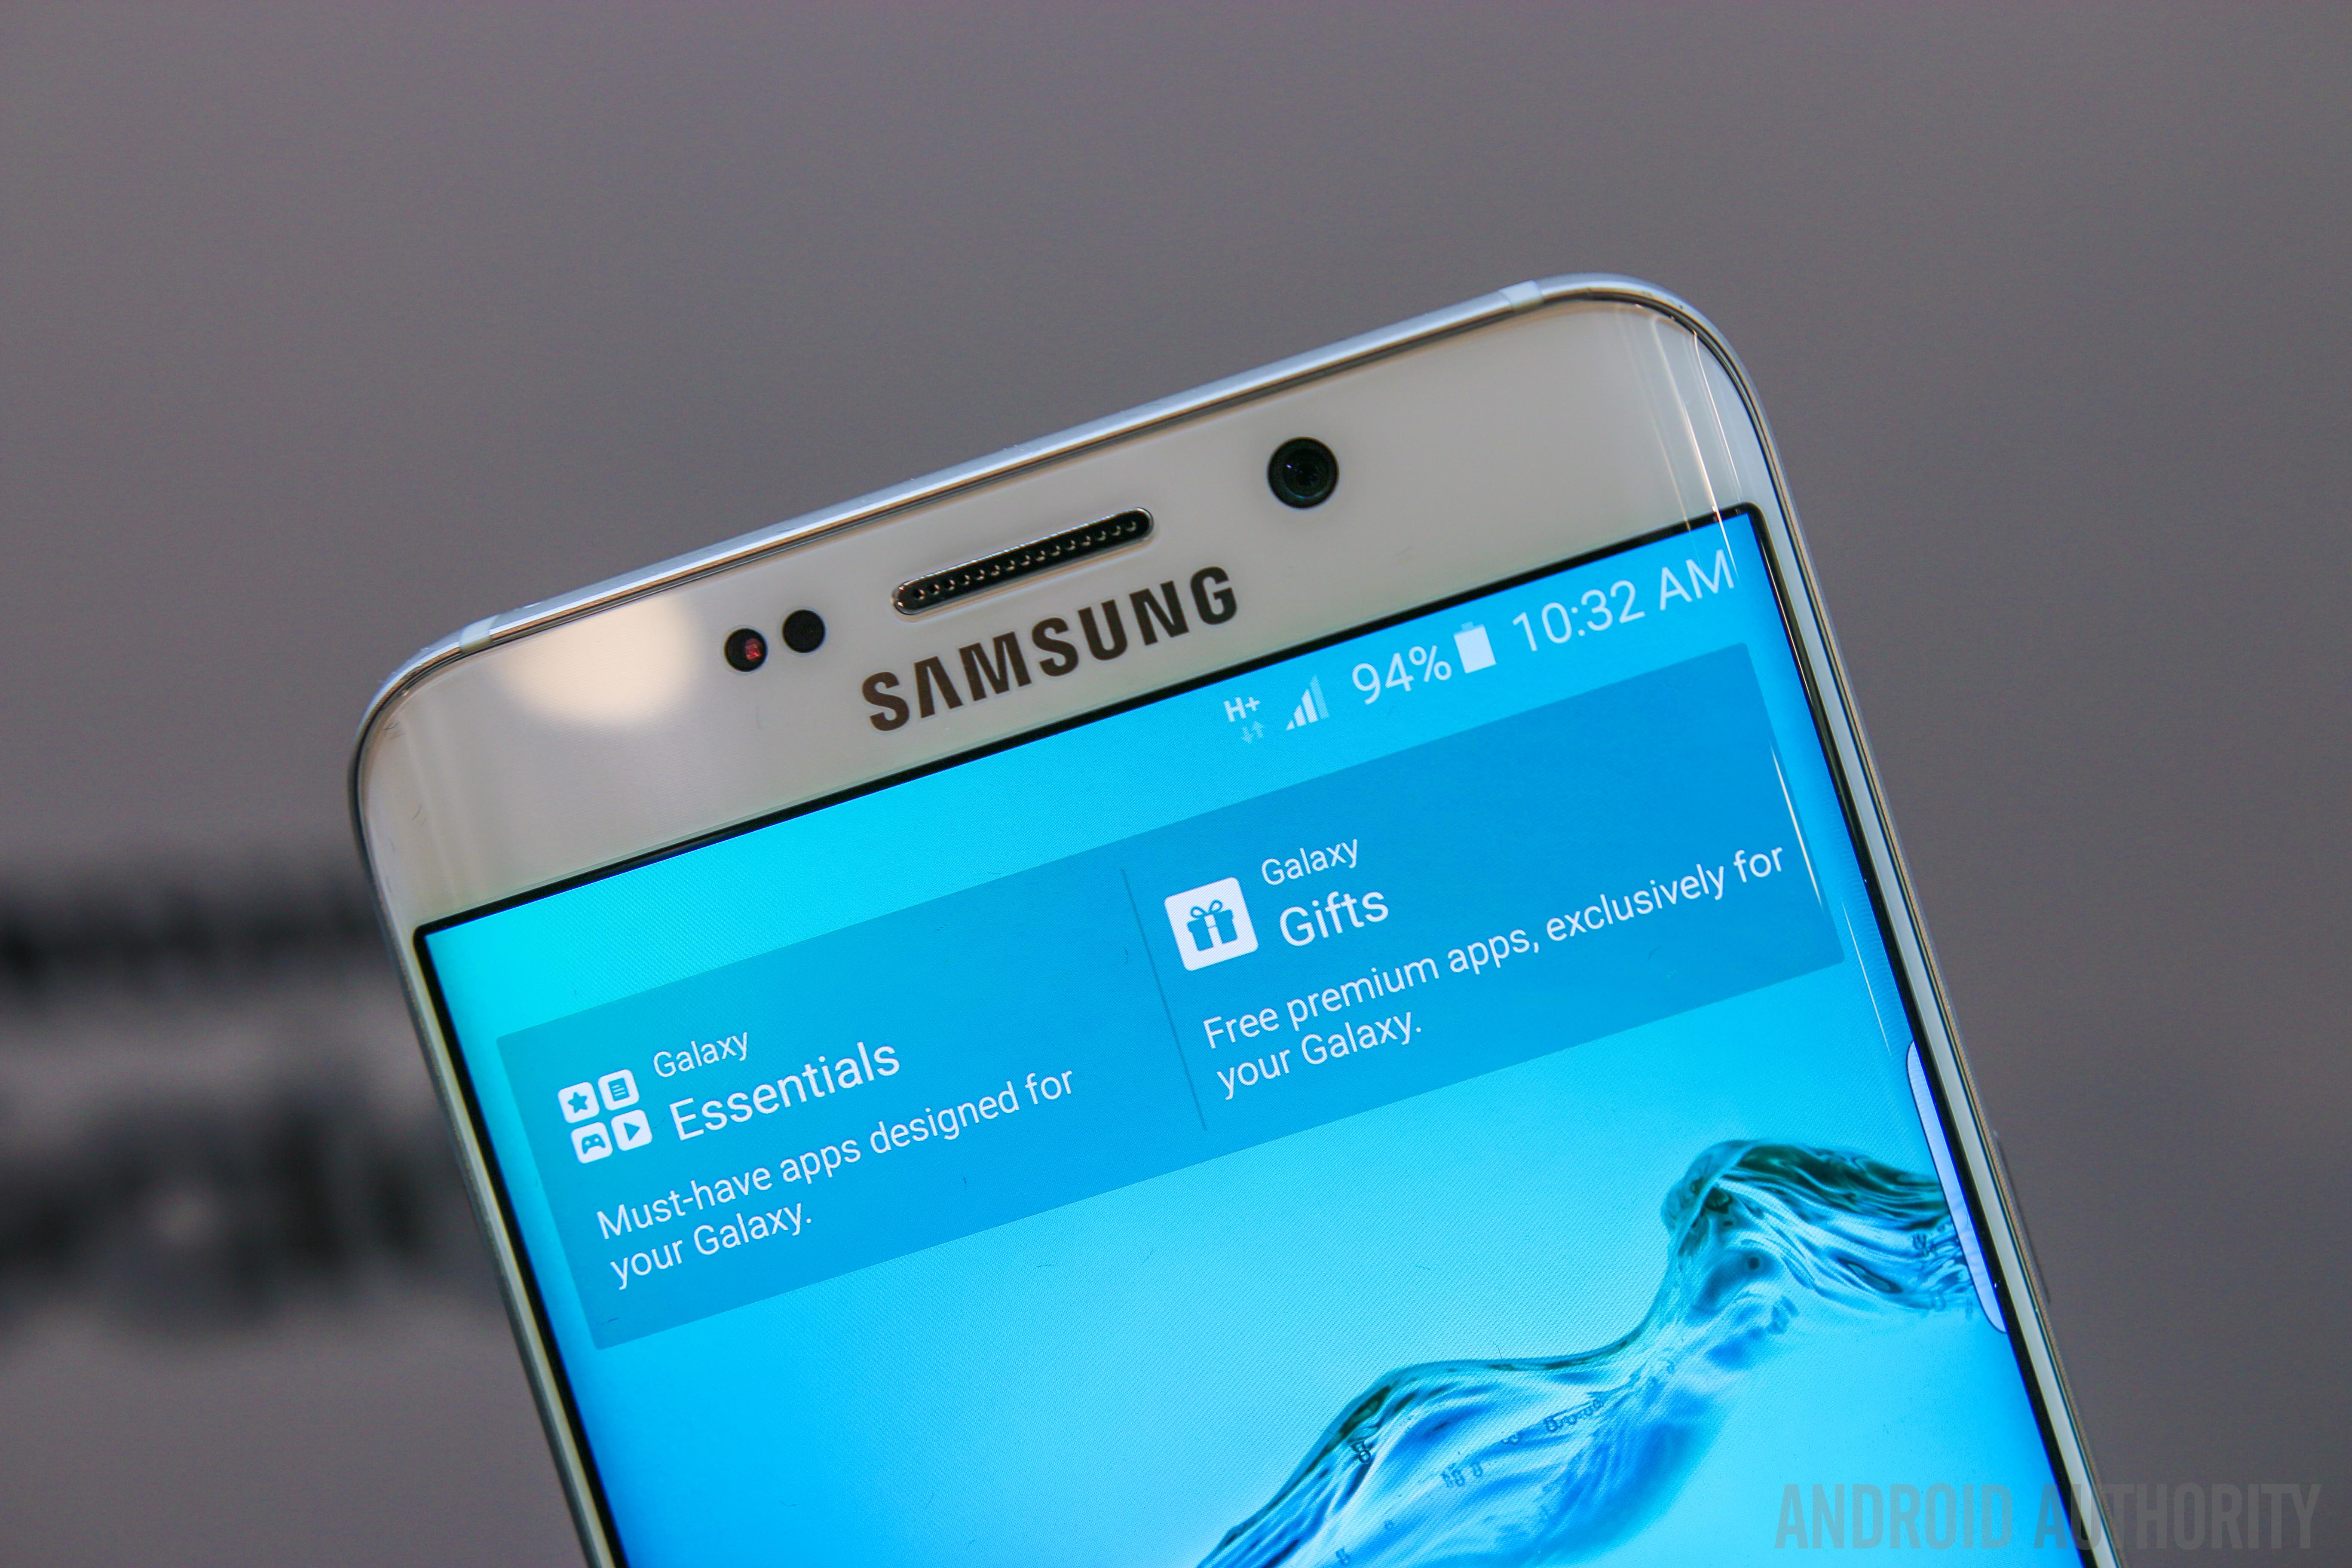 Samsung Galaxy S6 Edge Plus Hands On-23